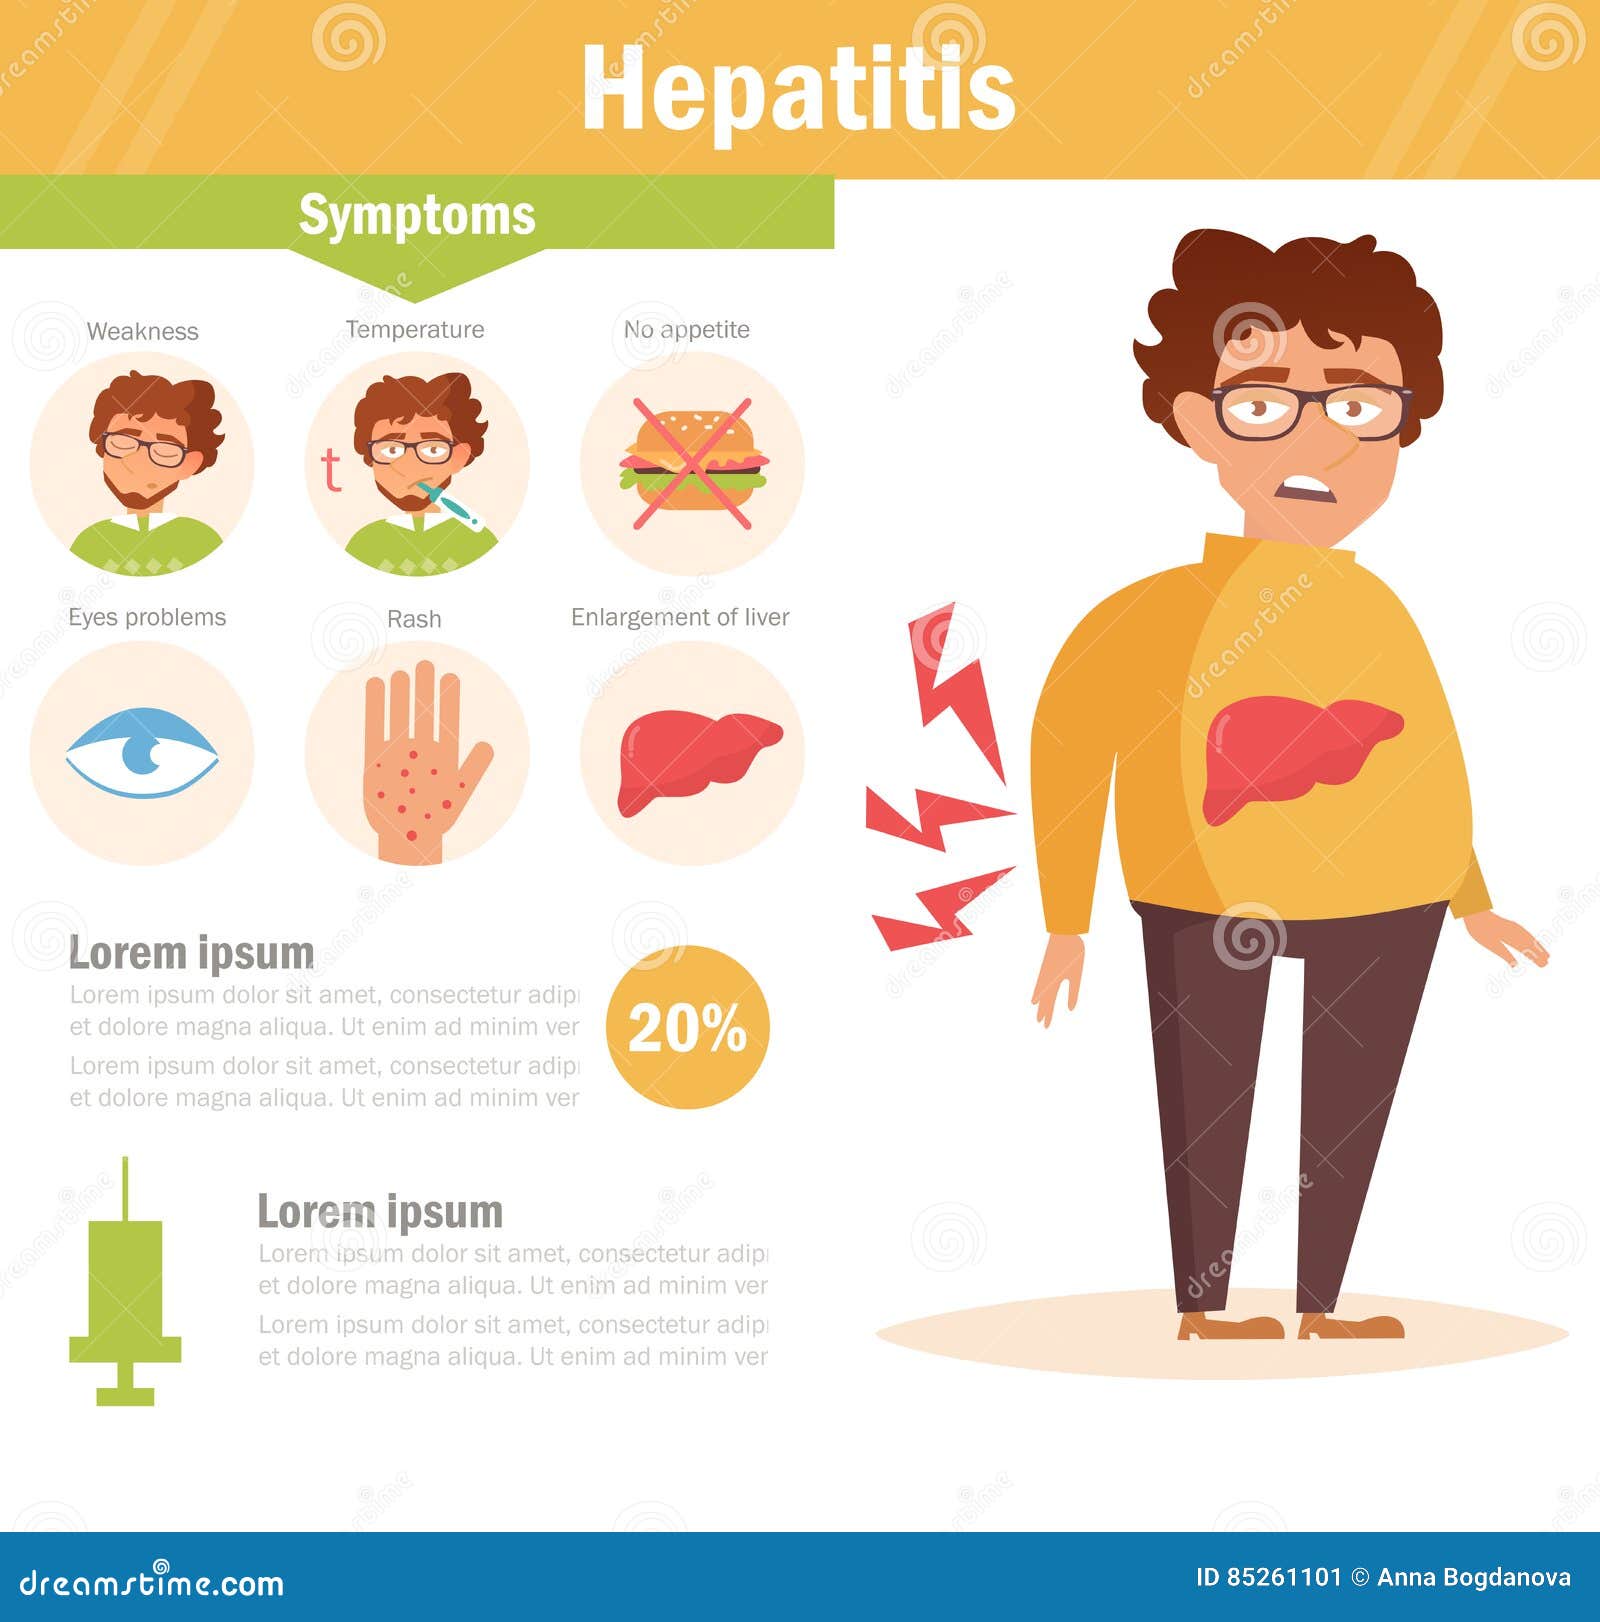 Hepatitis A B C Liver Disease Human Organ Virus Medicine ...